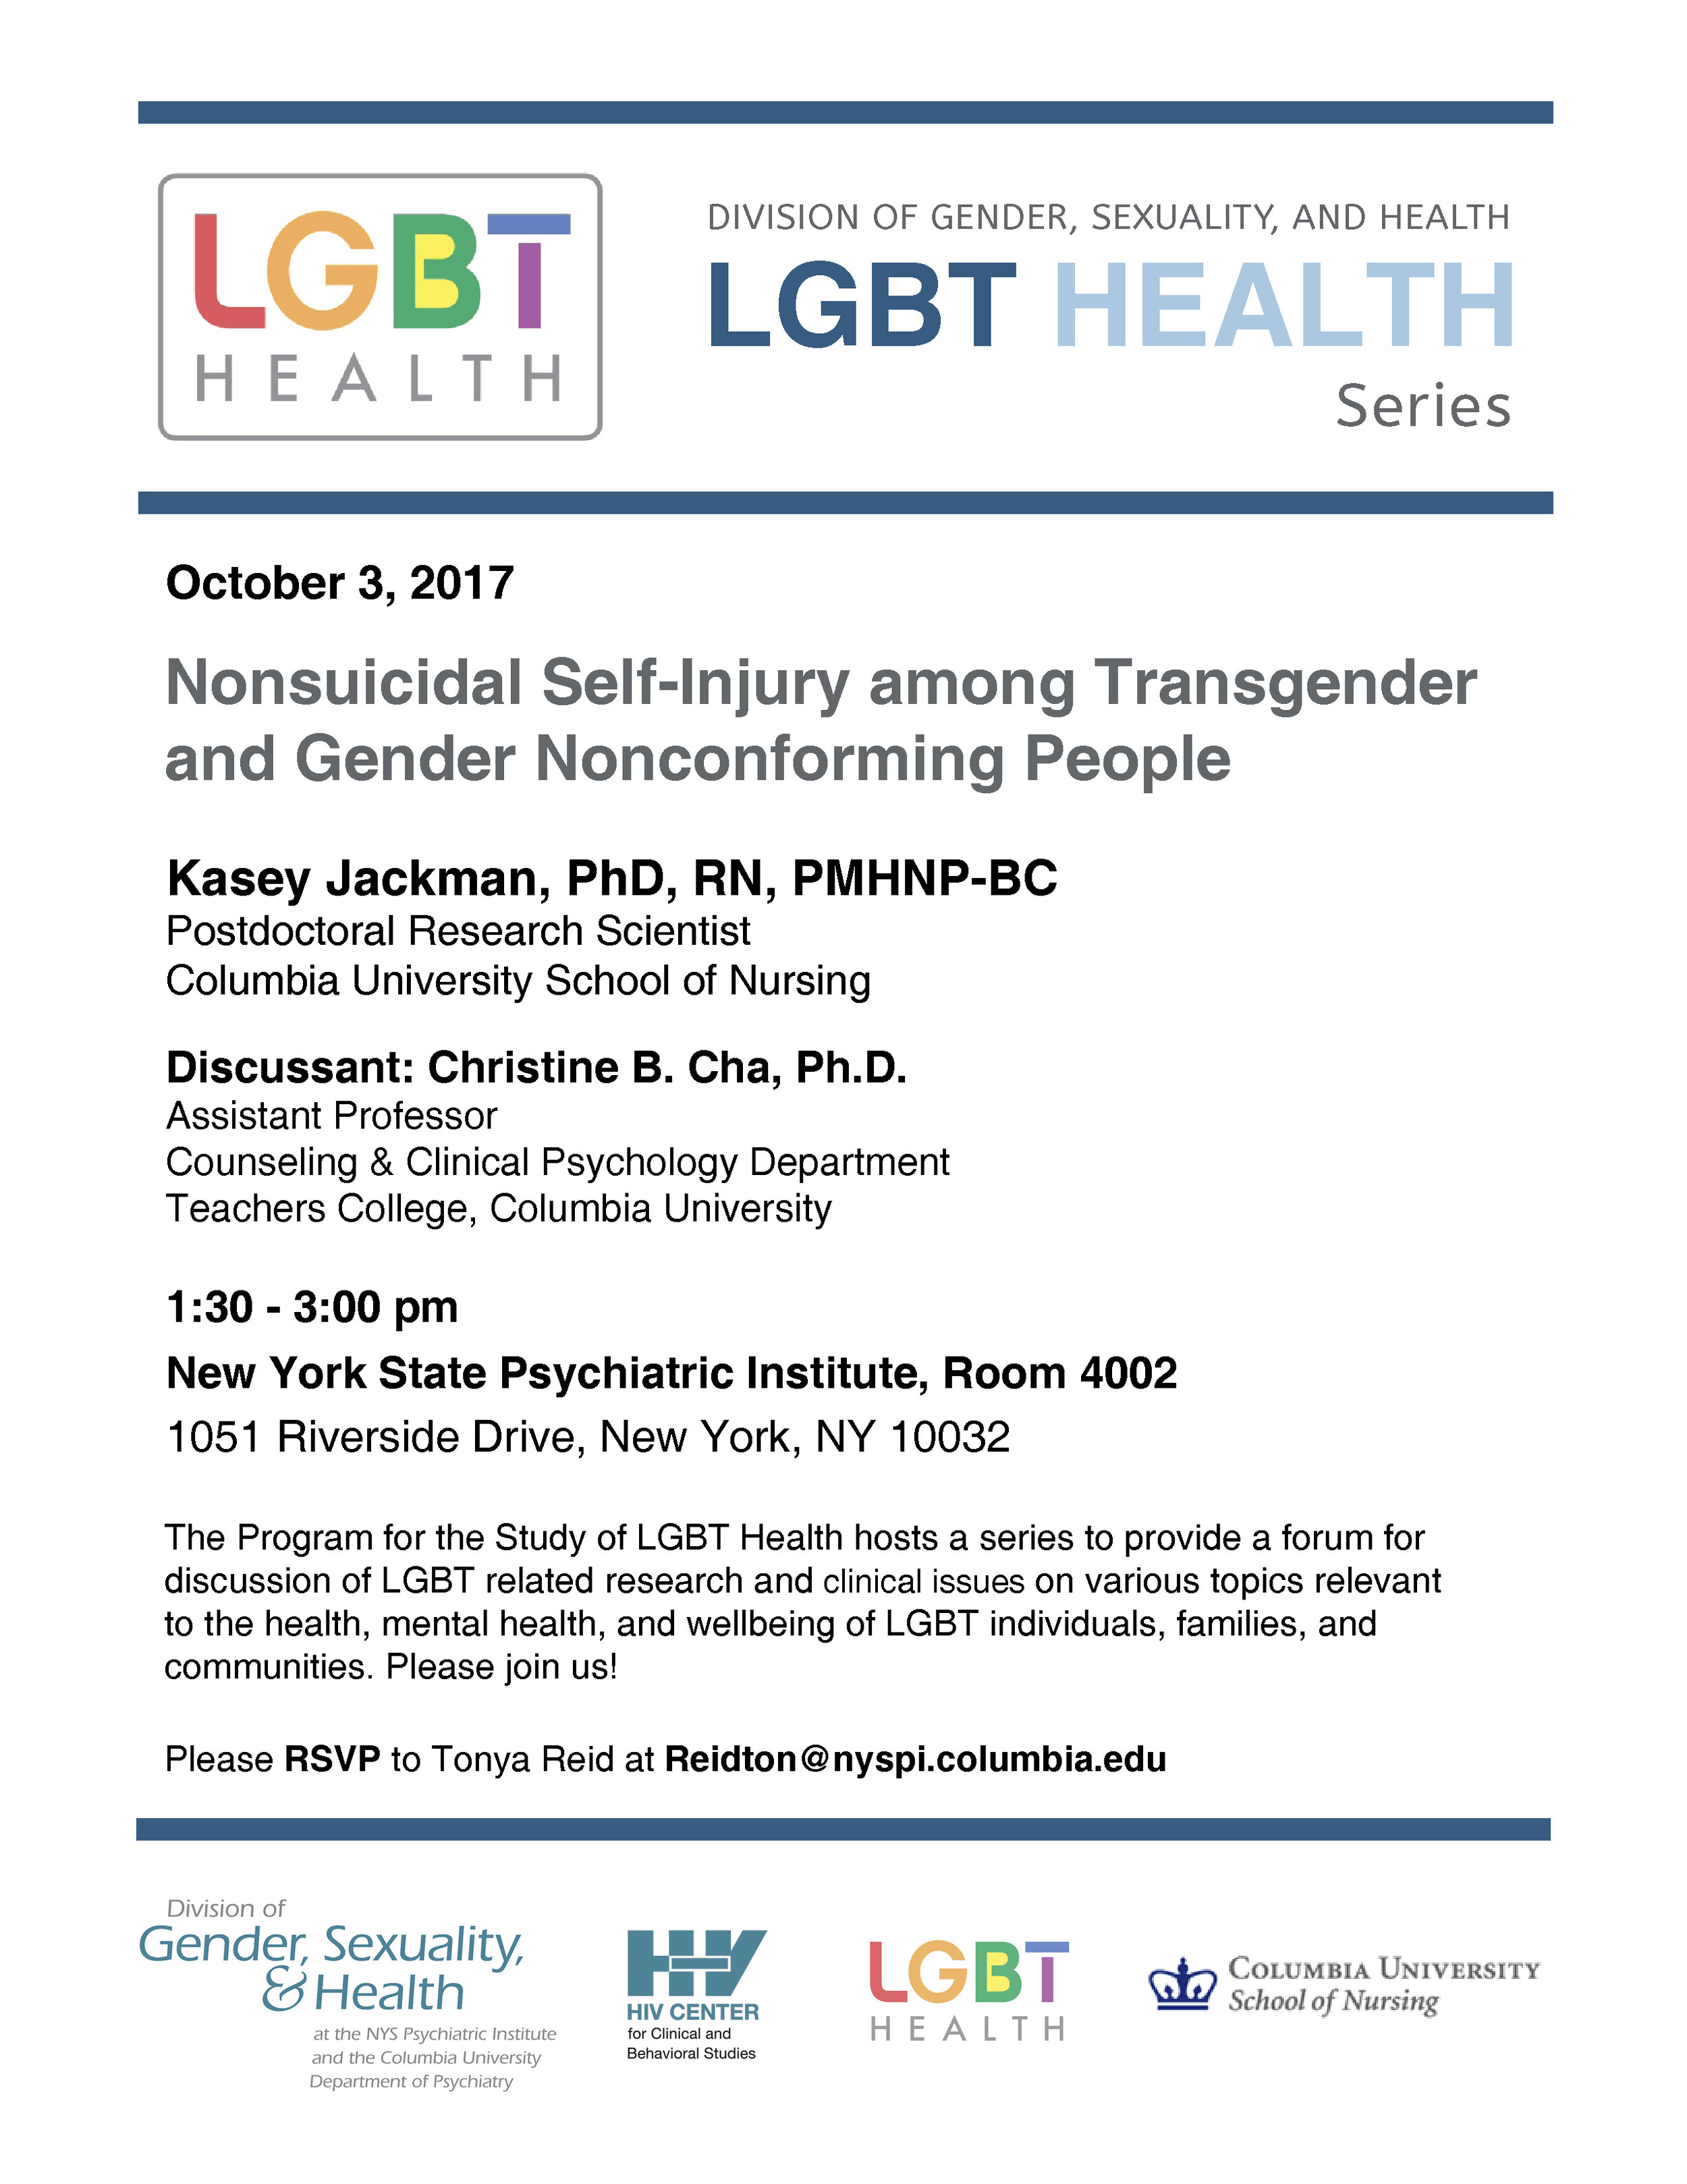 LGBT Health Series Oct 3 2017.jpg